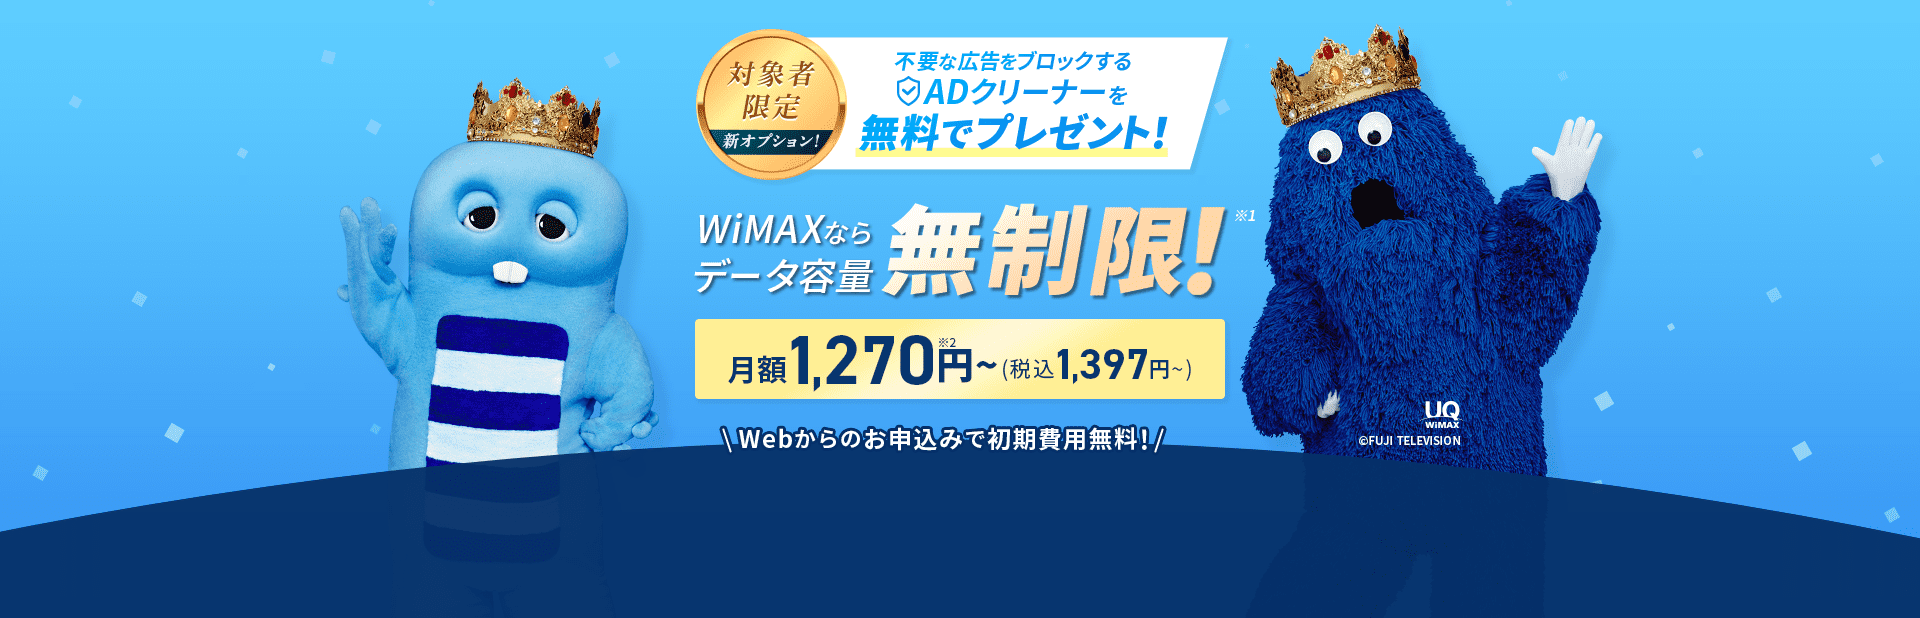 WiMAXならデータ容量無制限※1